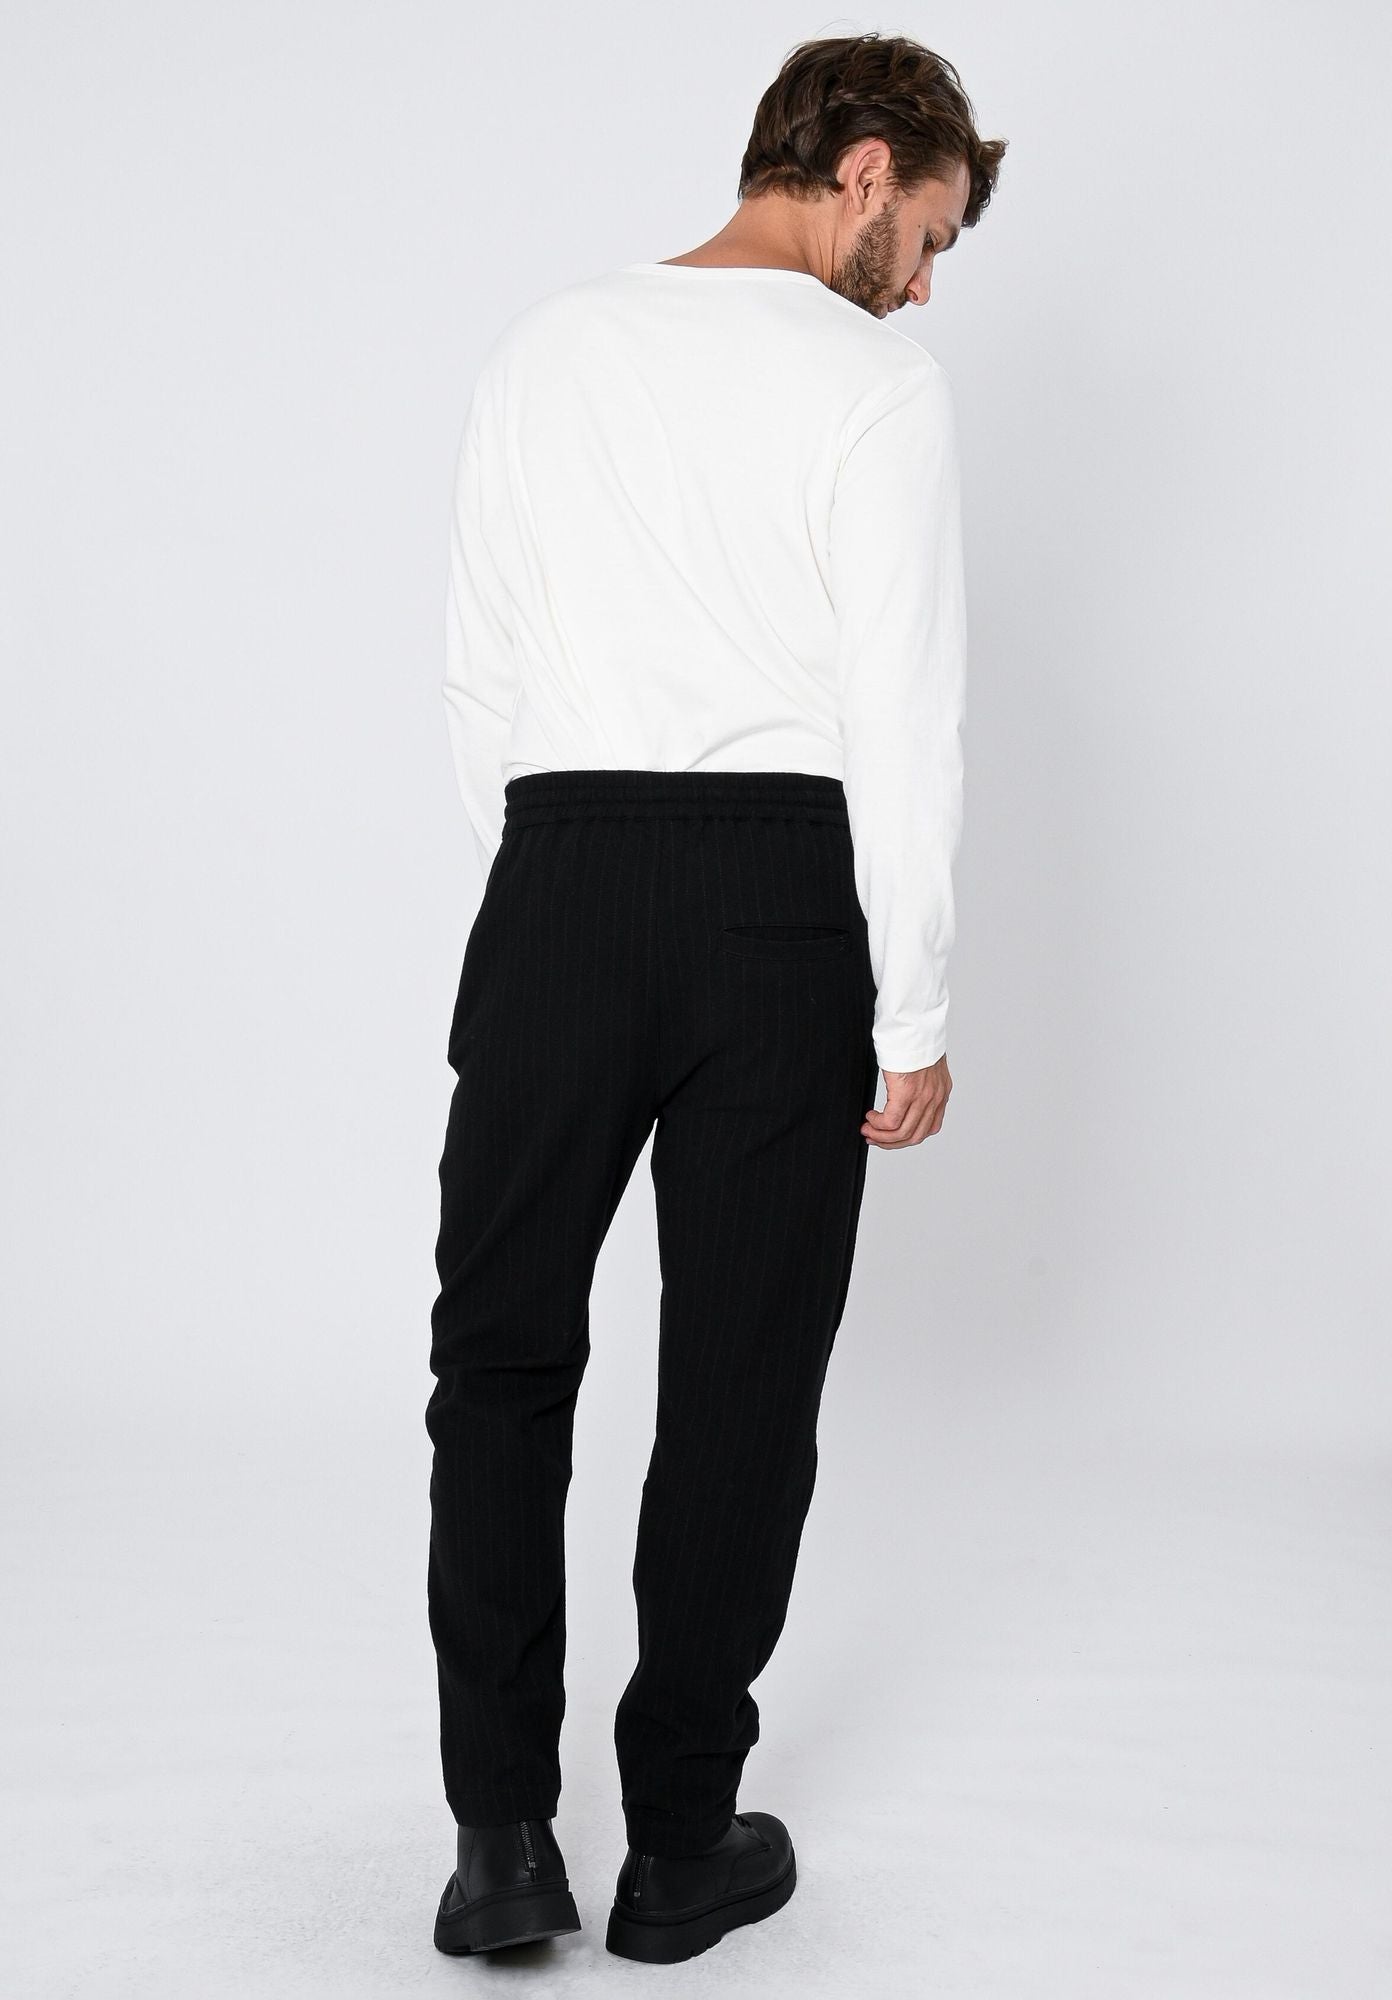 Black trousers TT82 made of organic cotton from Thokkthokk